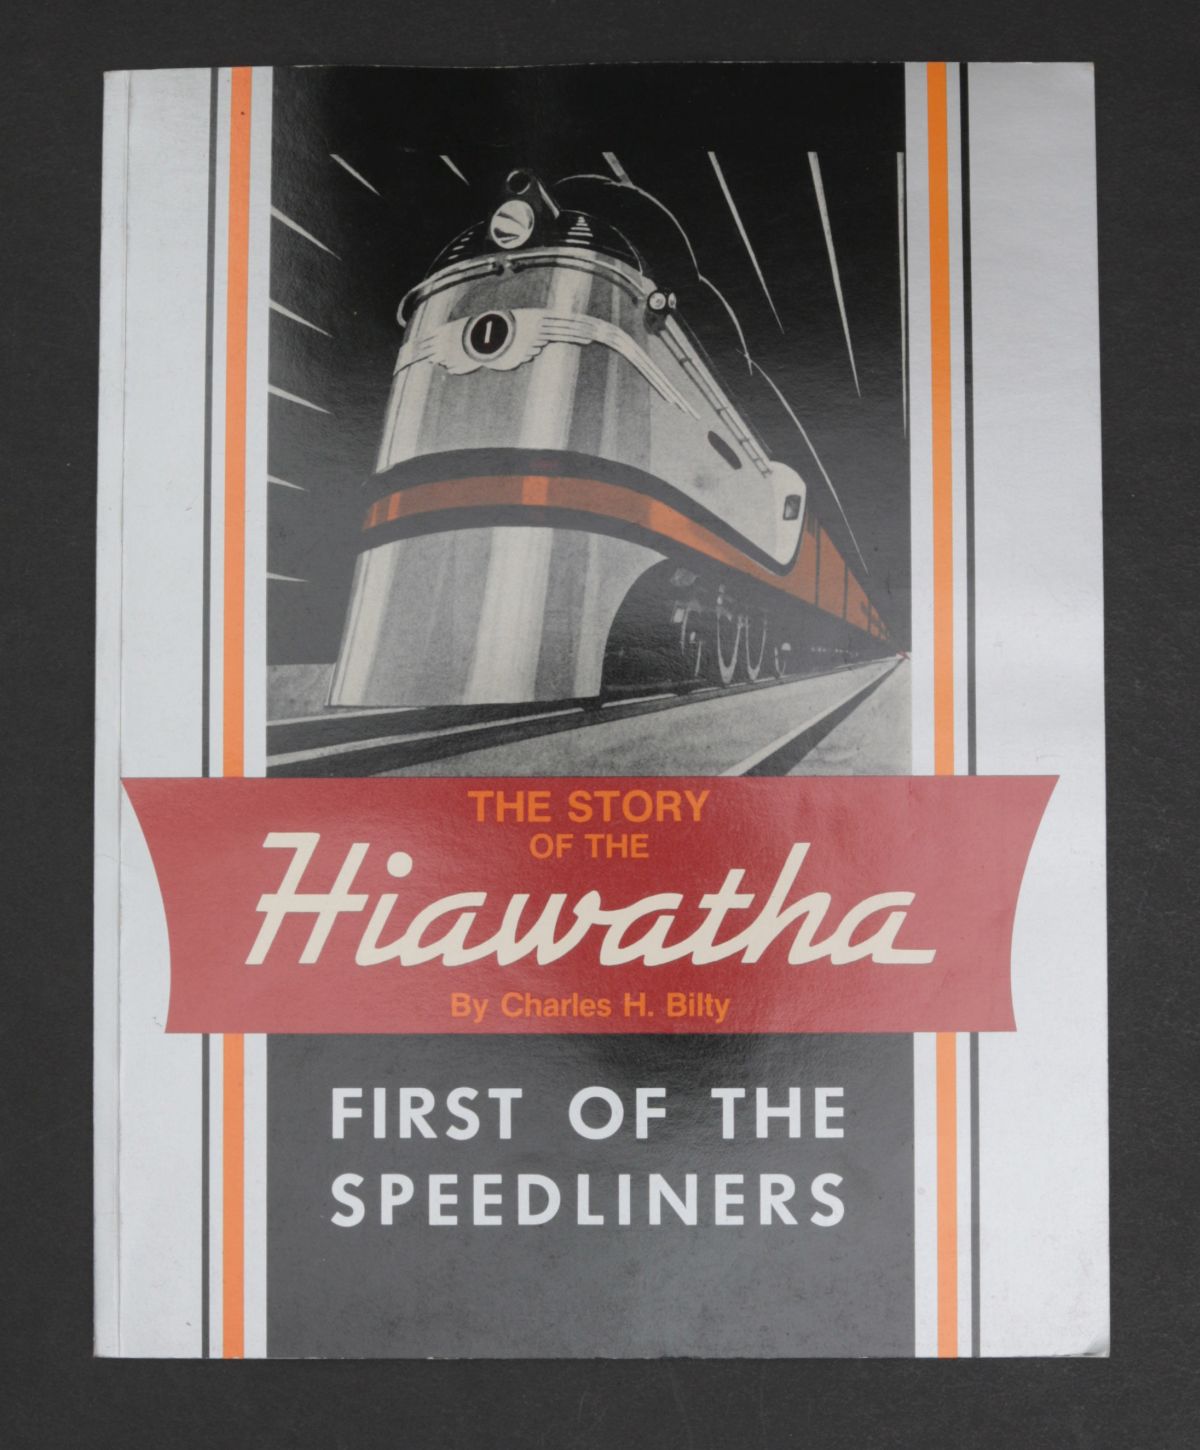 SEVENTEEN PIECES OF HIAWATHA RAILROAD EPHEMERA